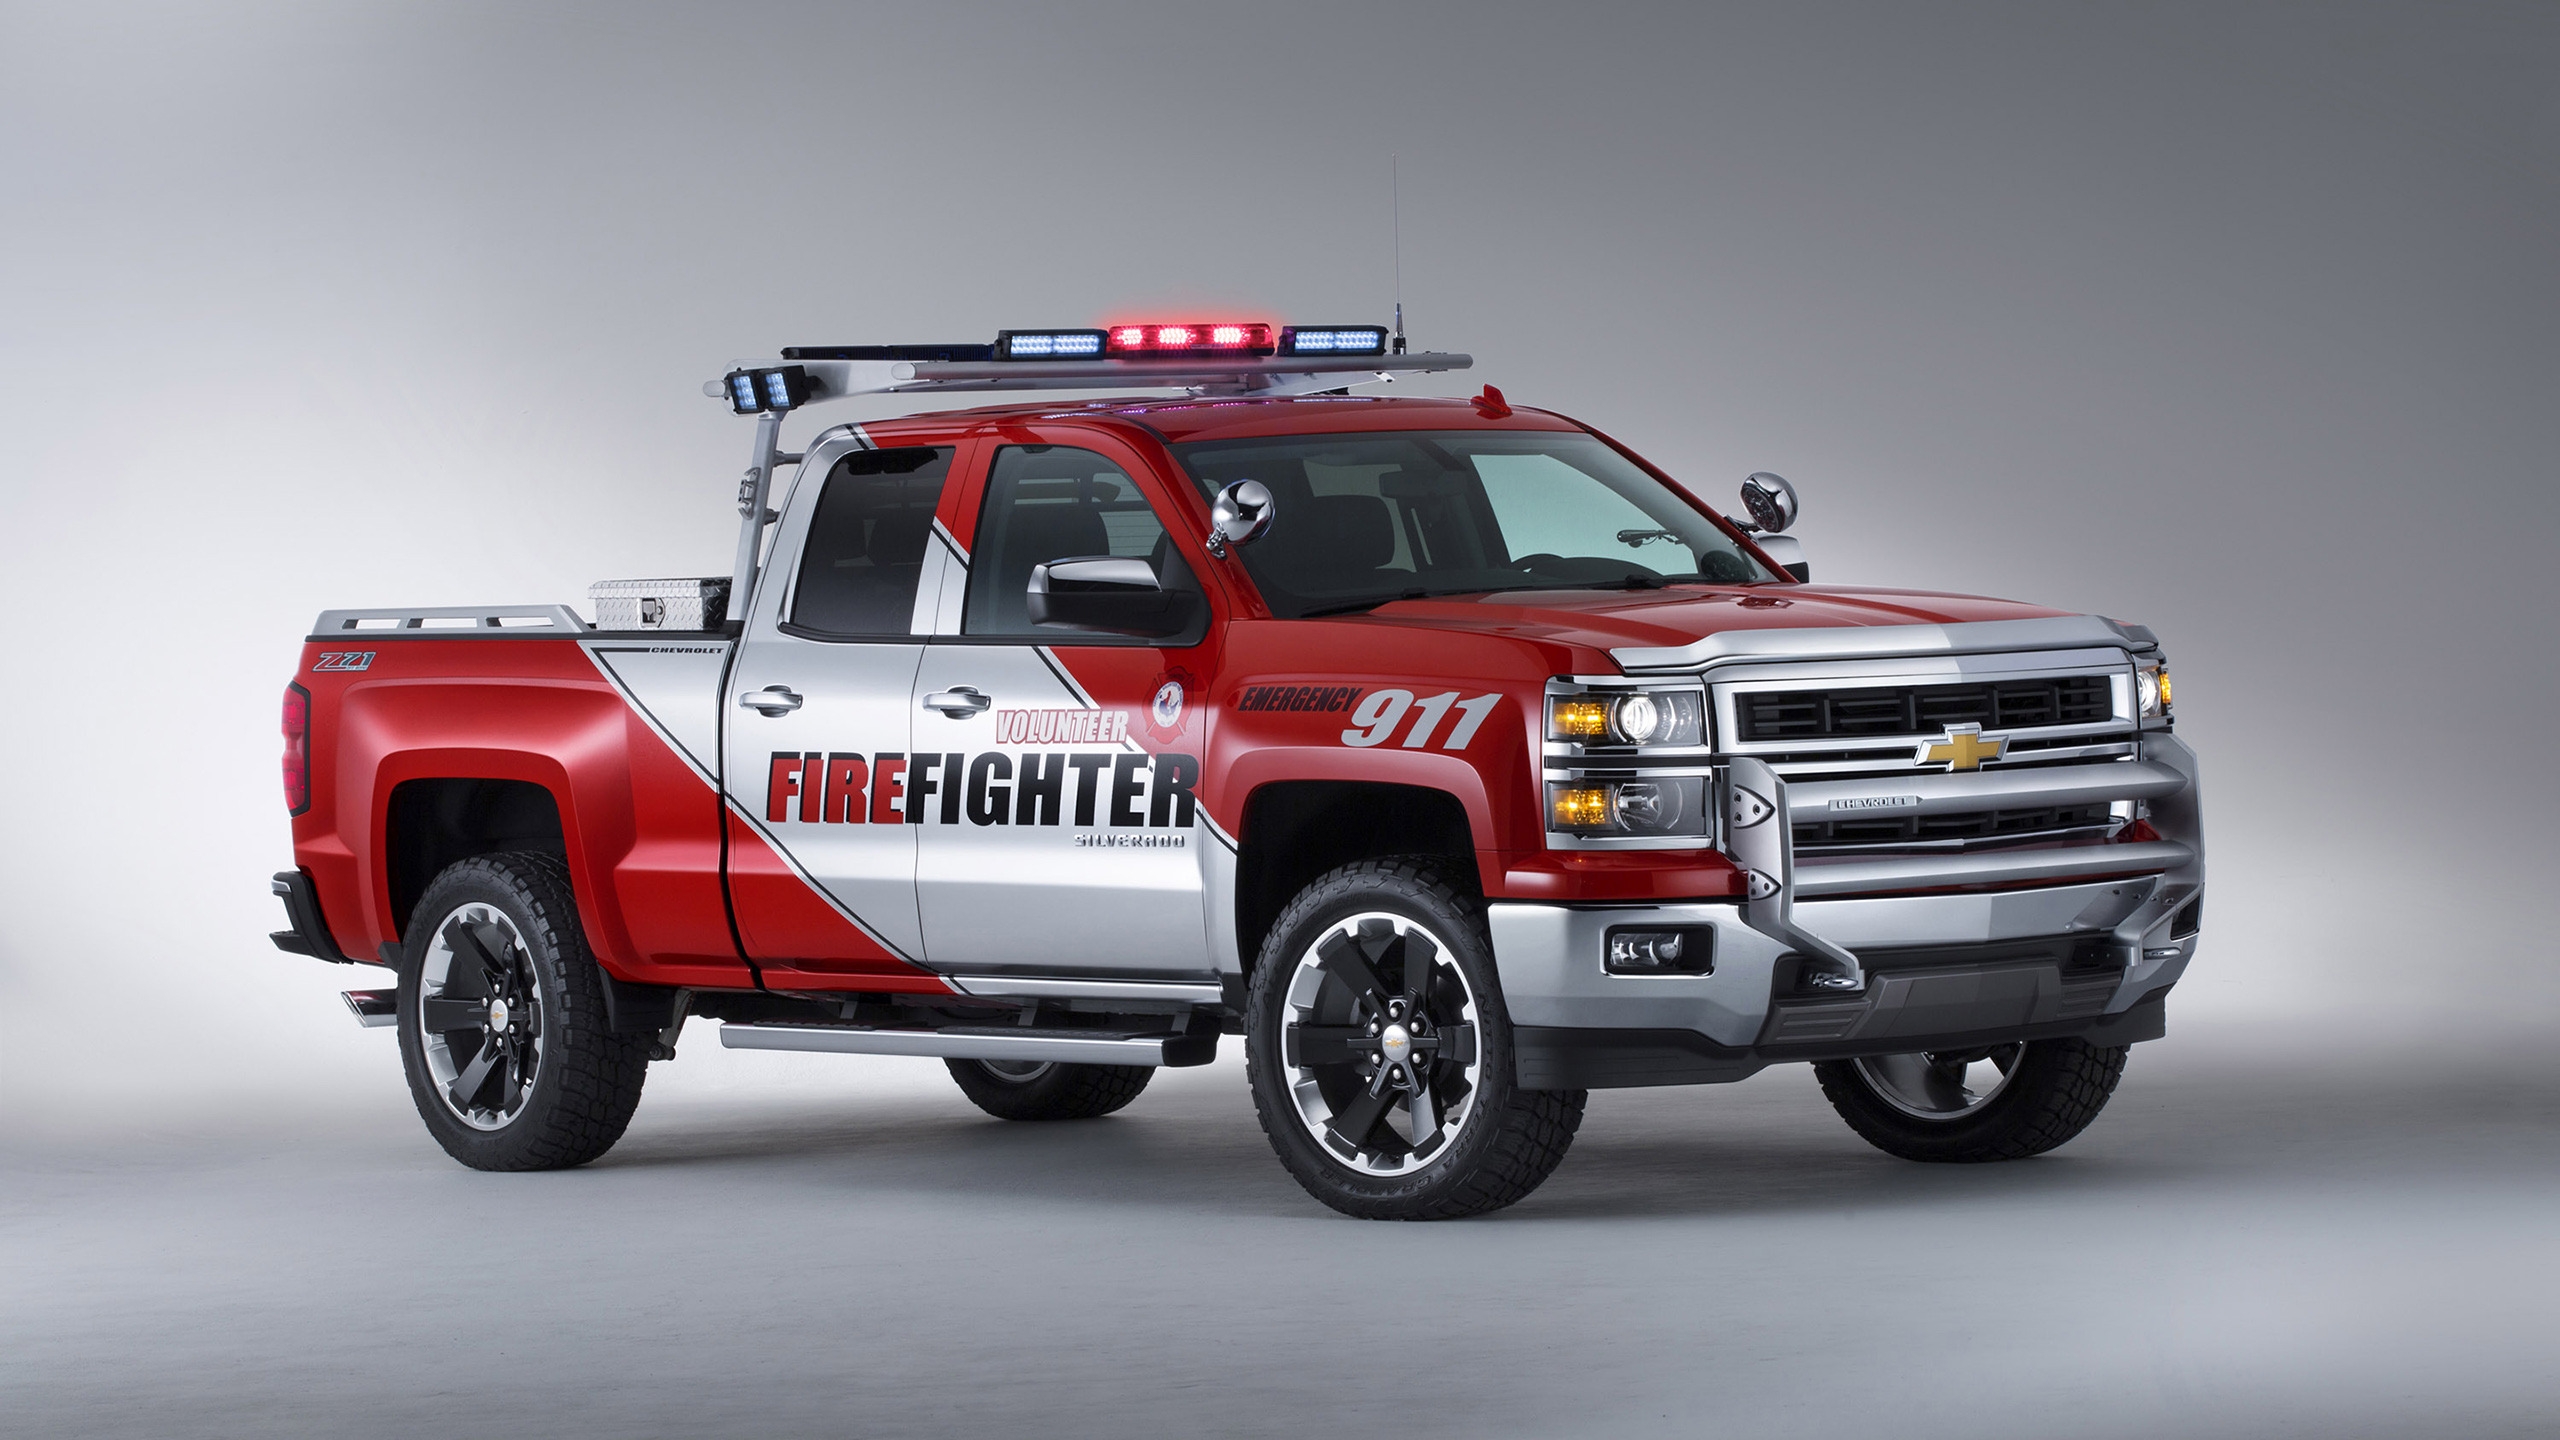 Chevrolet Silverado Volunteer Firefighters Concept for 2560x1440 HDTV resolution